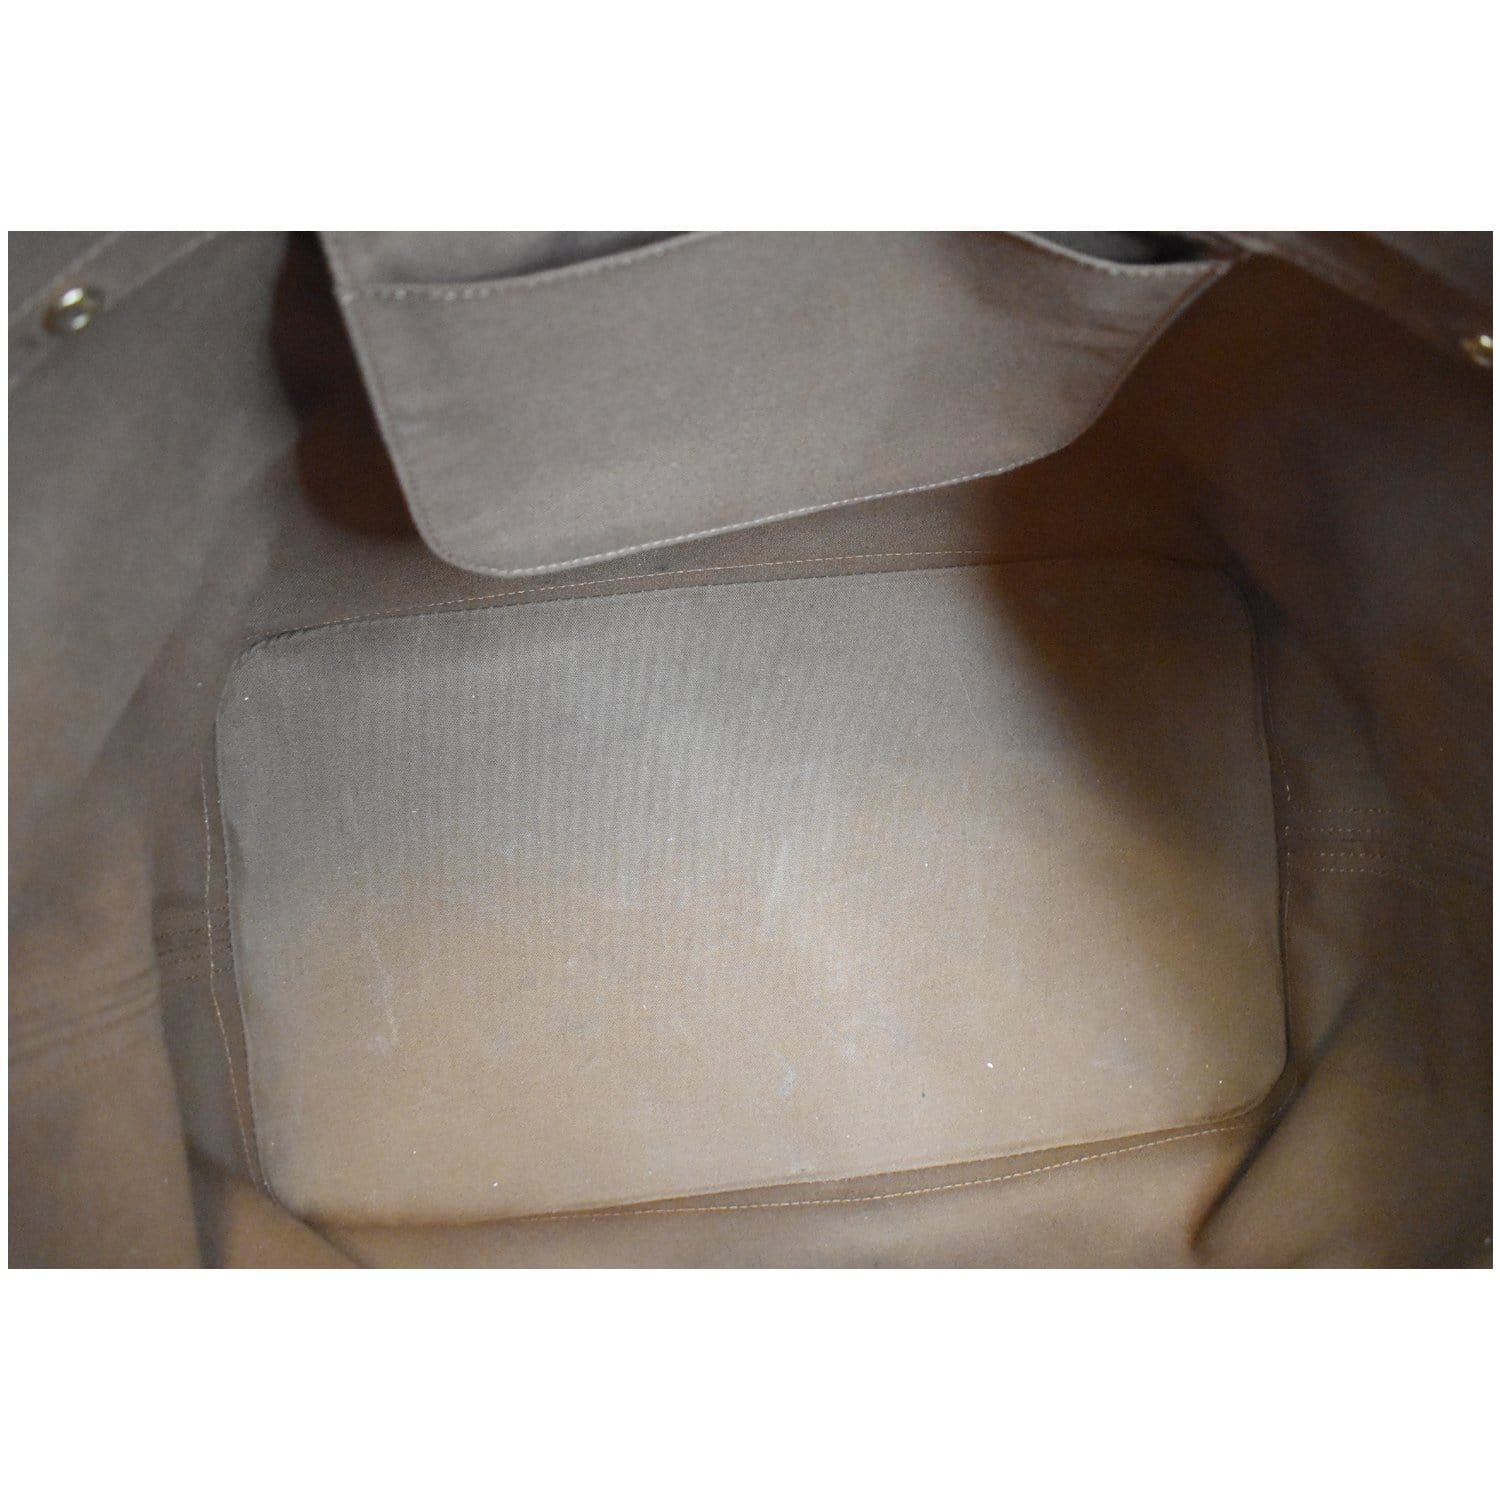 Louis Vuitton Cruiser Travel bag 328131